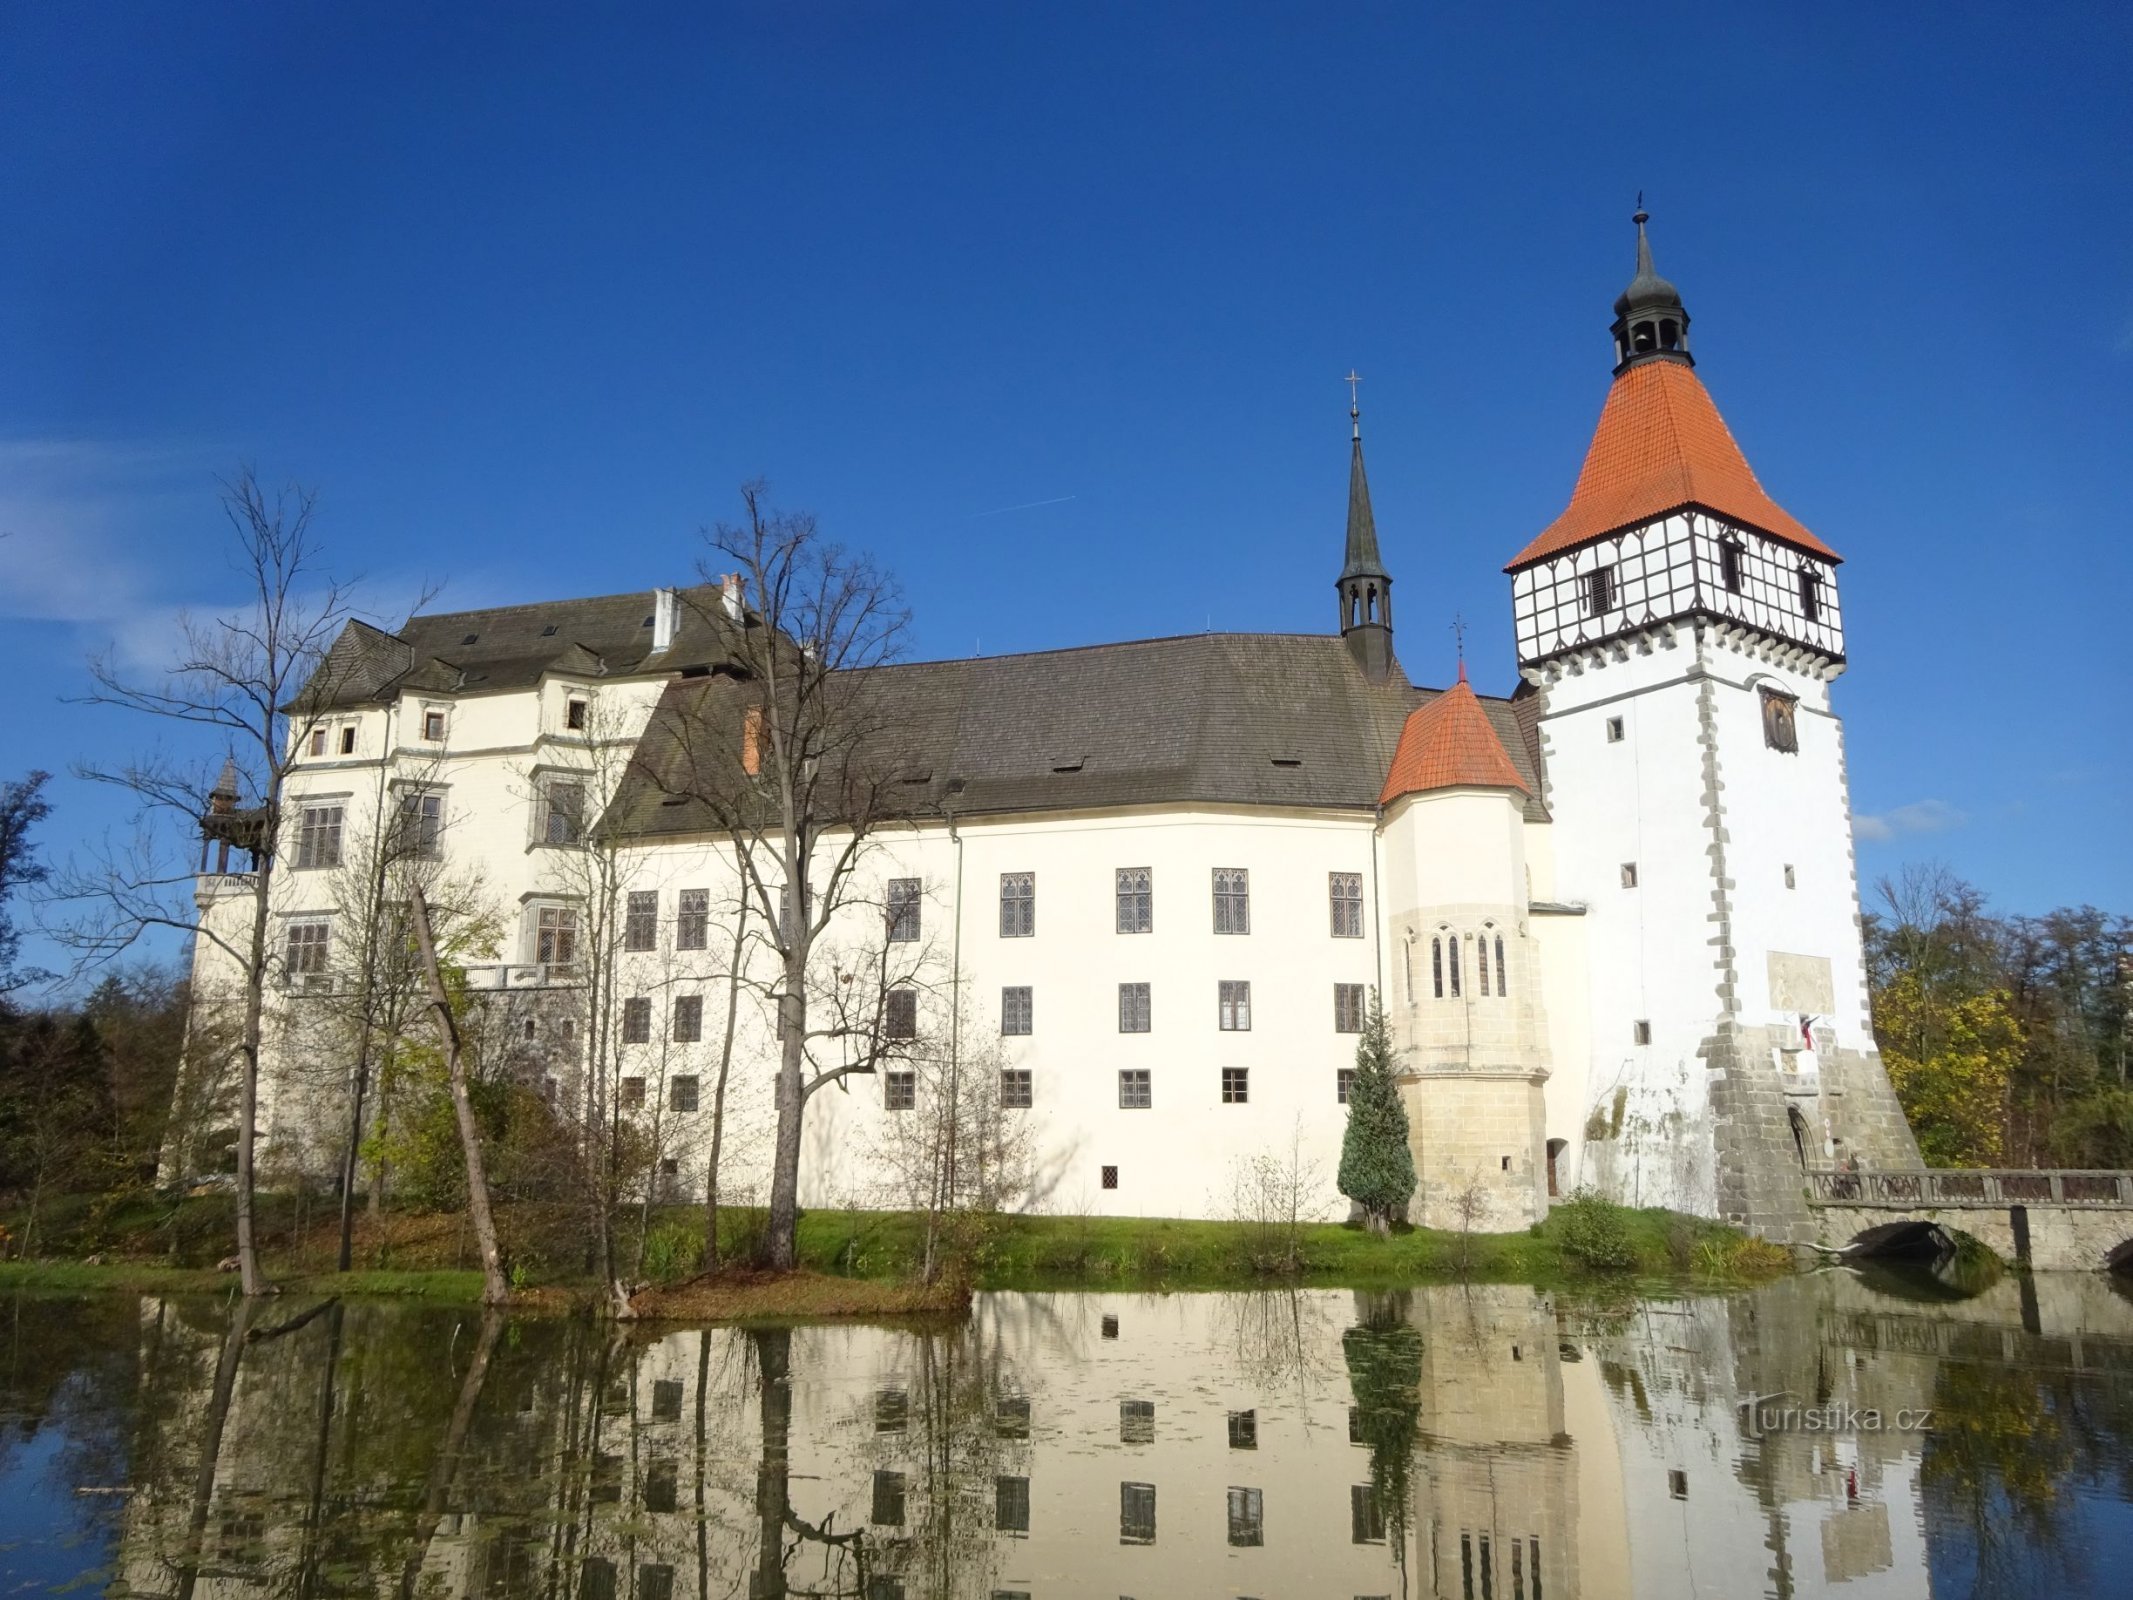 Blatná - castle, castle park, fallow and birch trees